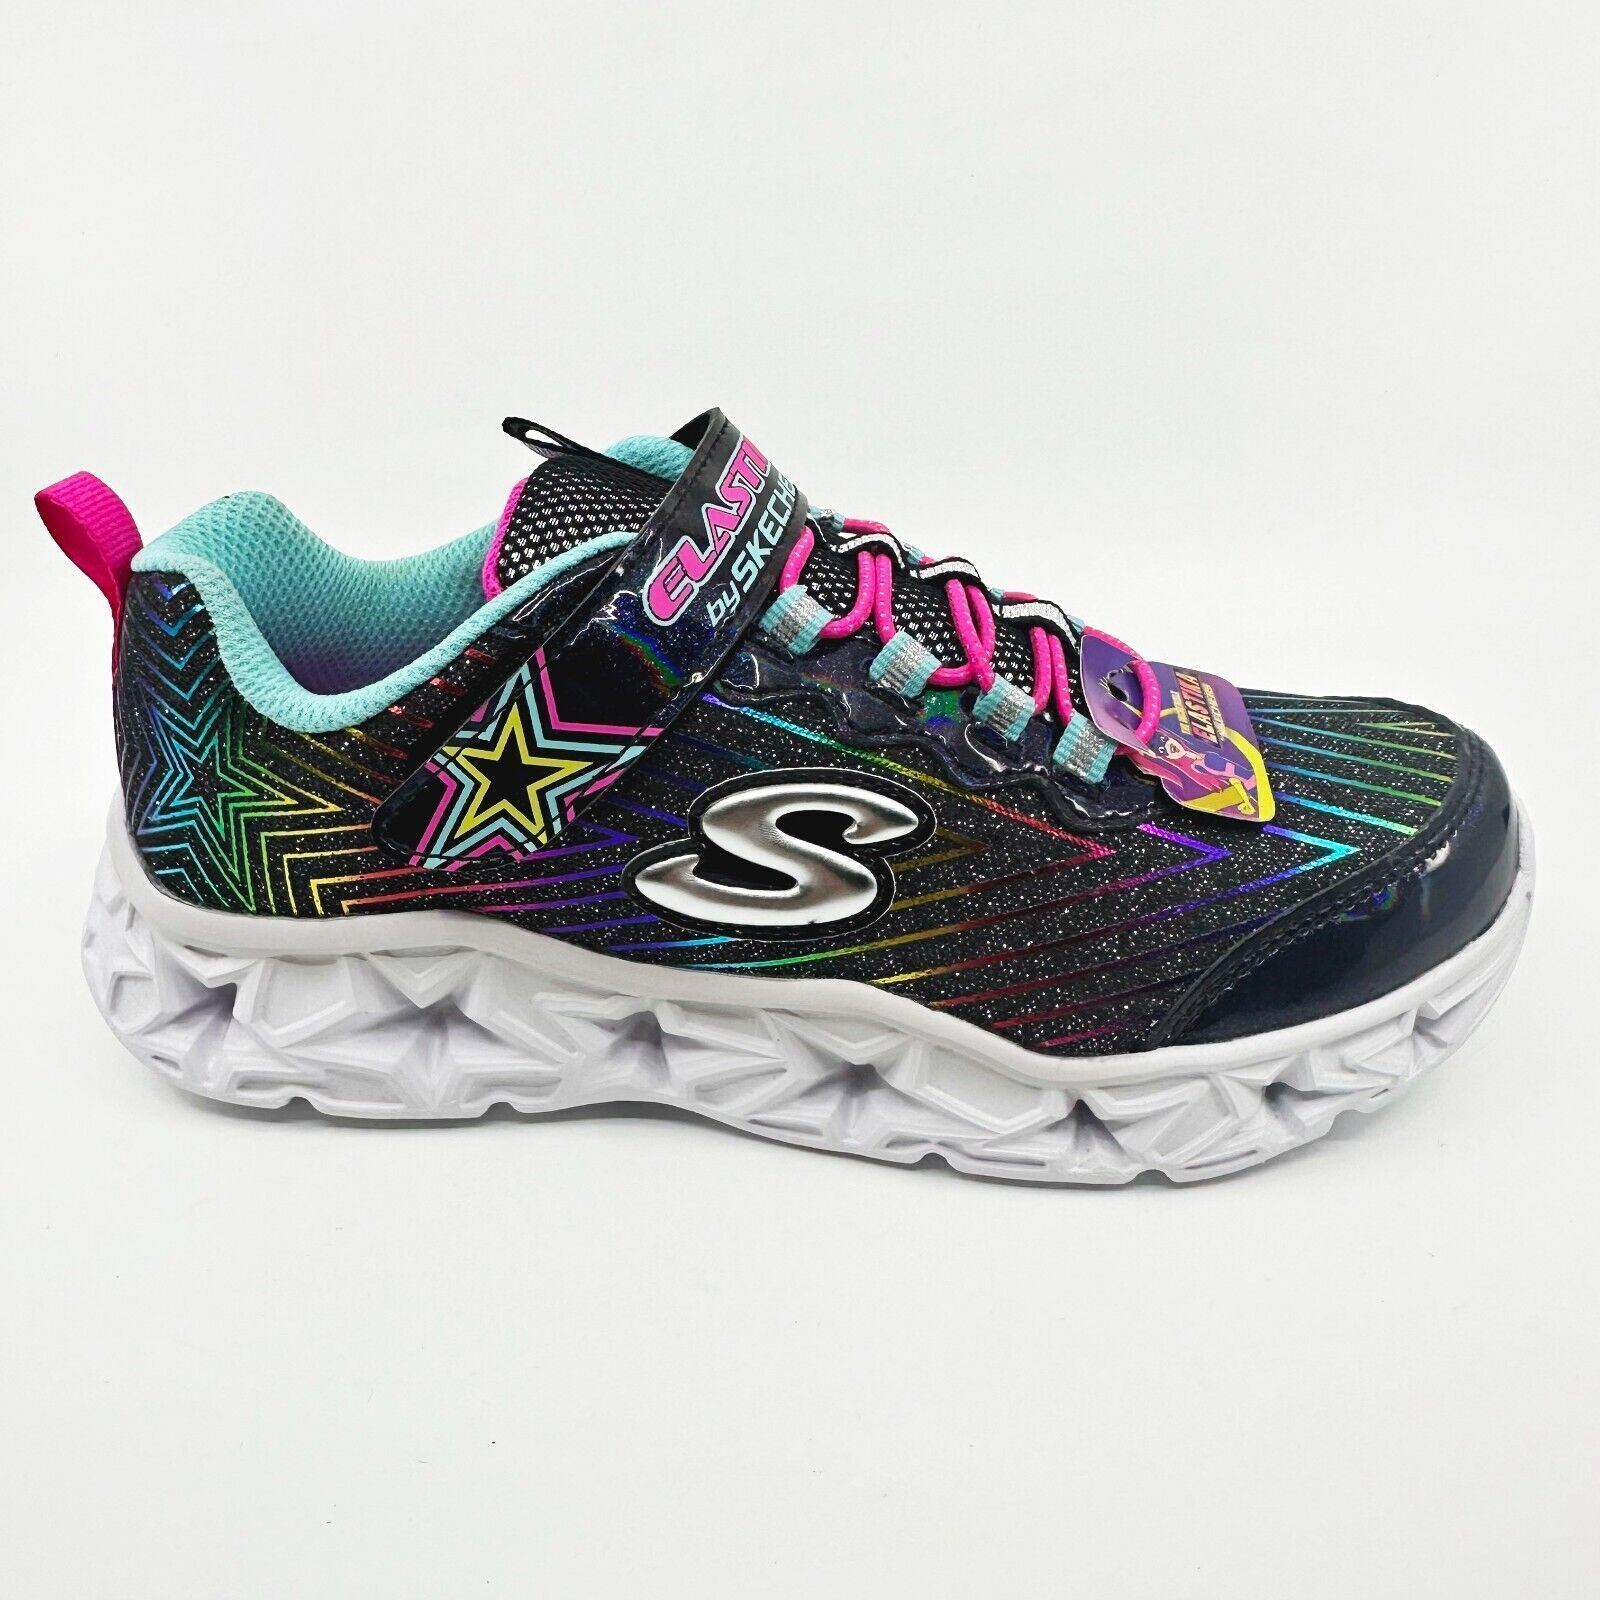 Primary image for Skechers Elastika Black Sparkly Rainbow Kids Girls Size 3 Sneakers